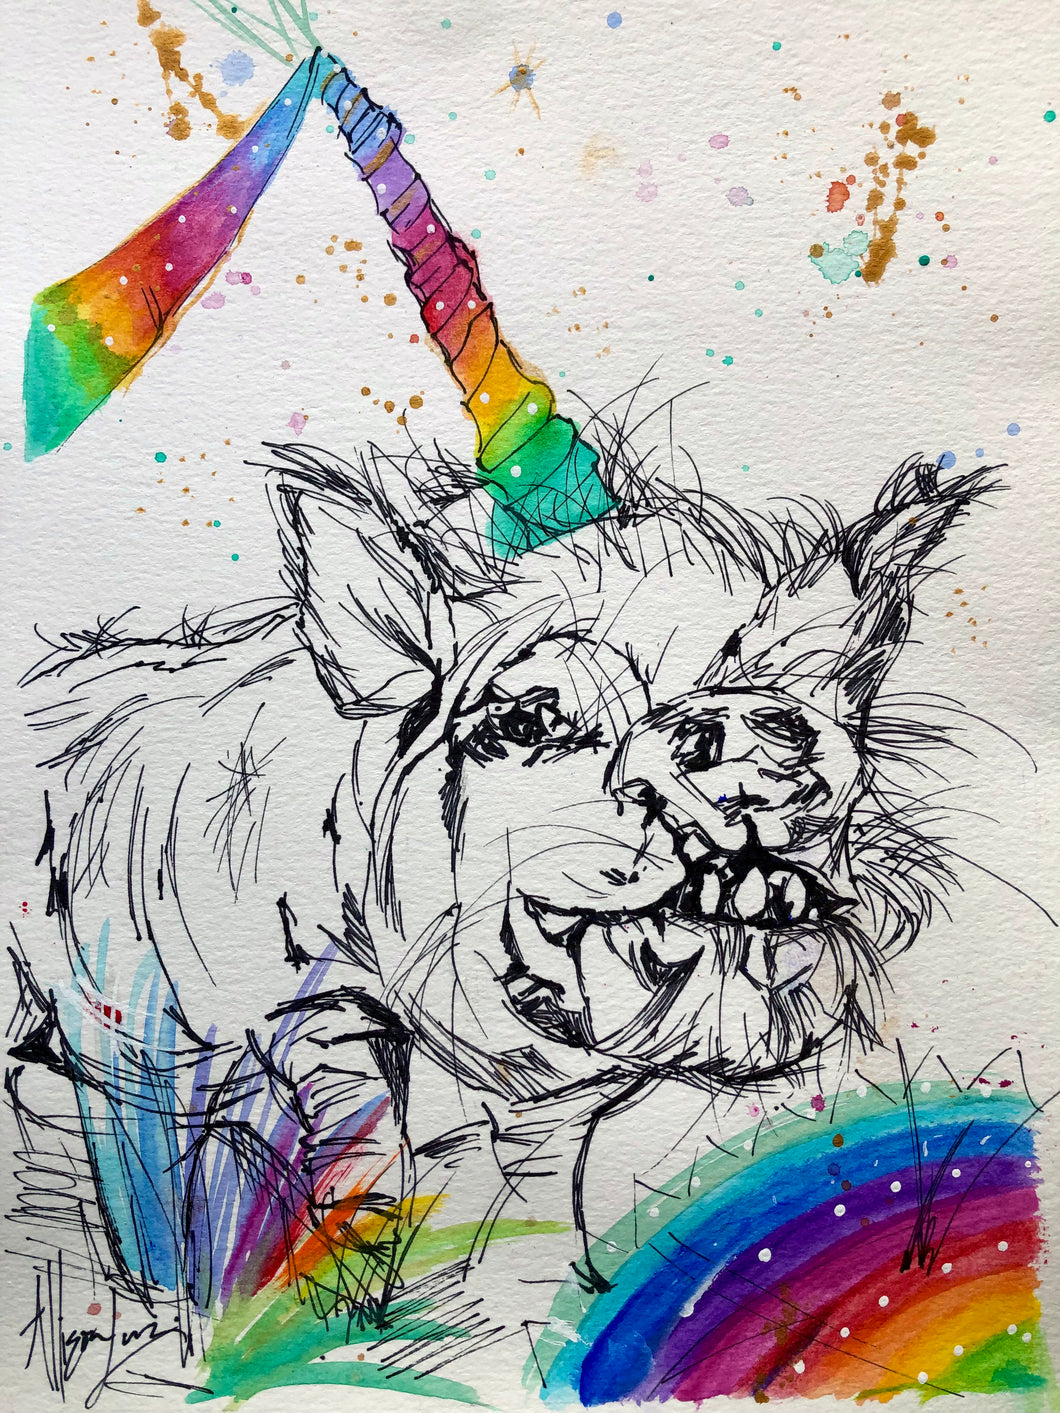 Glitter Rainbow Pig Art Original Mixed Media Painting 9” x 12” - benefits Odd Man In.man Animal Refuge